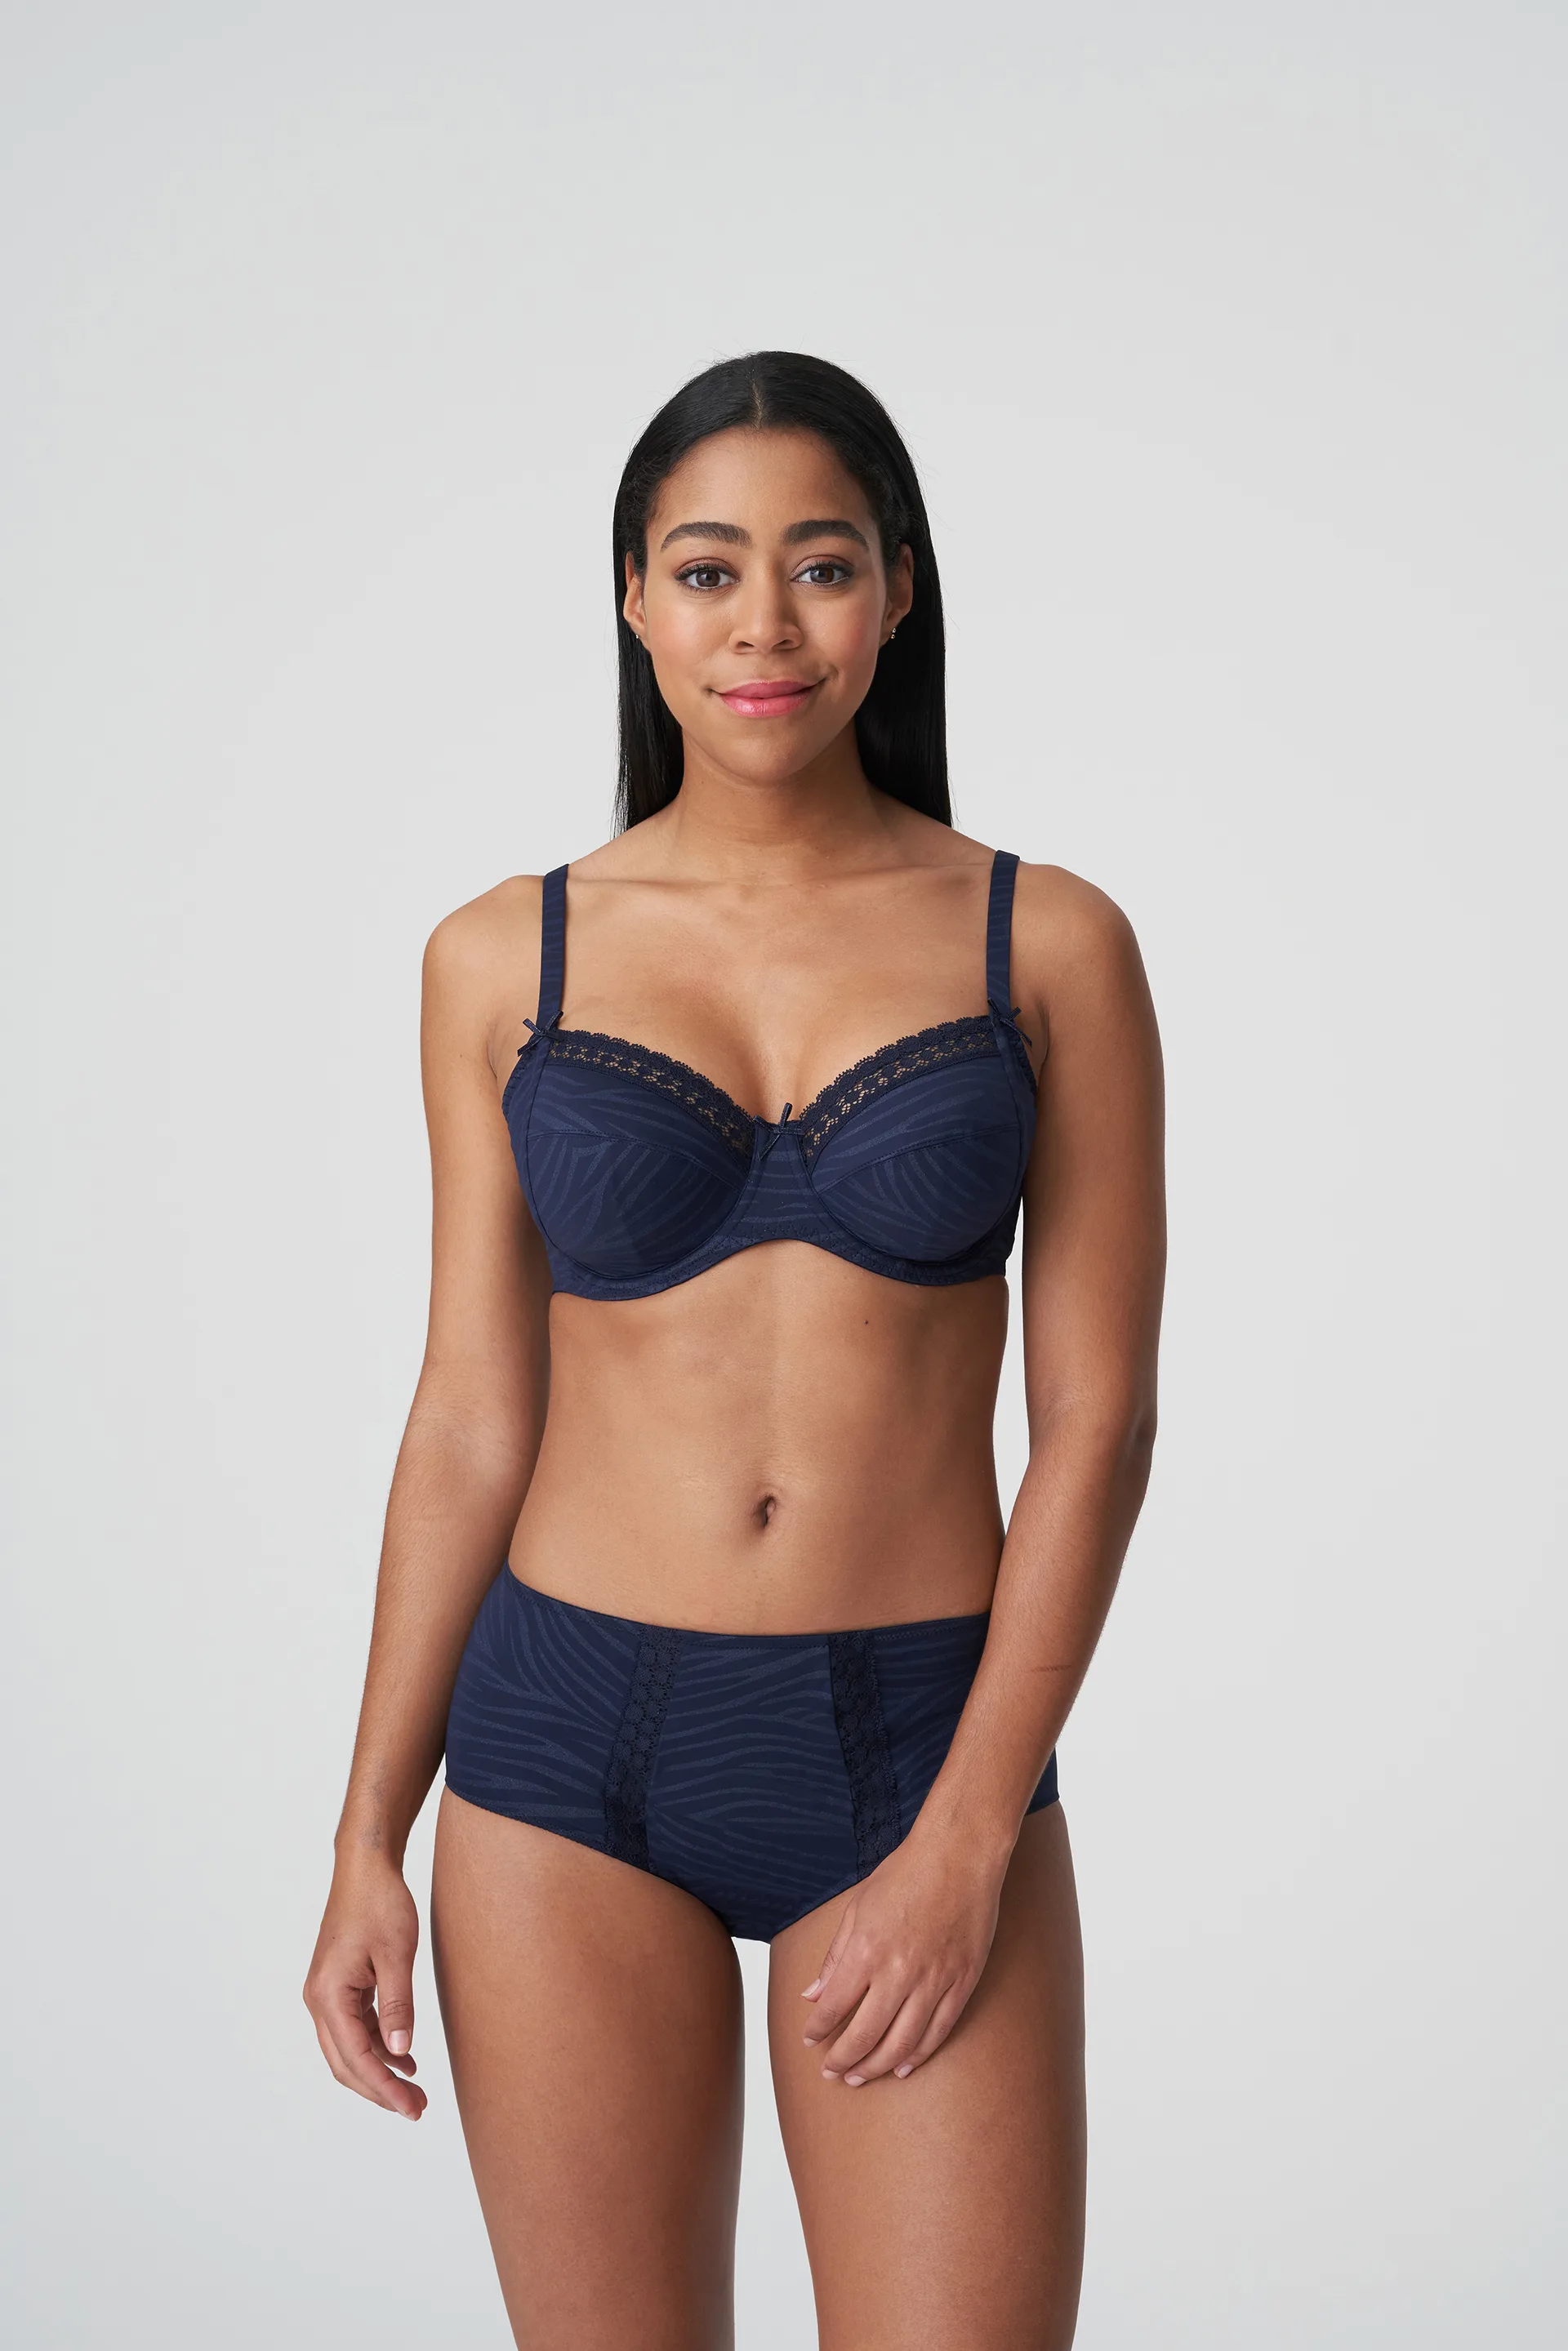 Navy blue bra - End of lingerie series